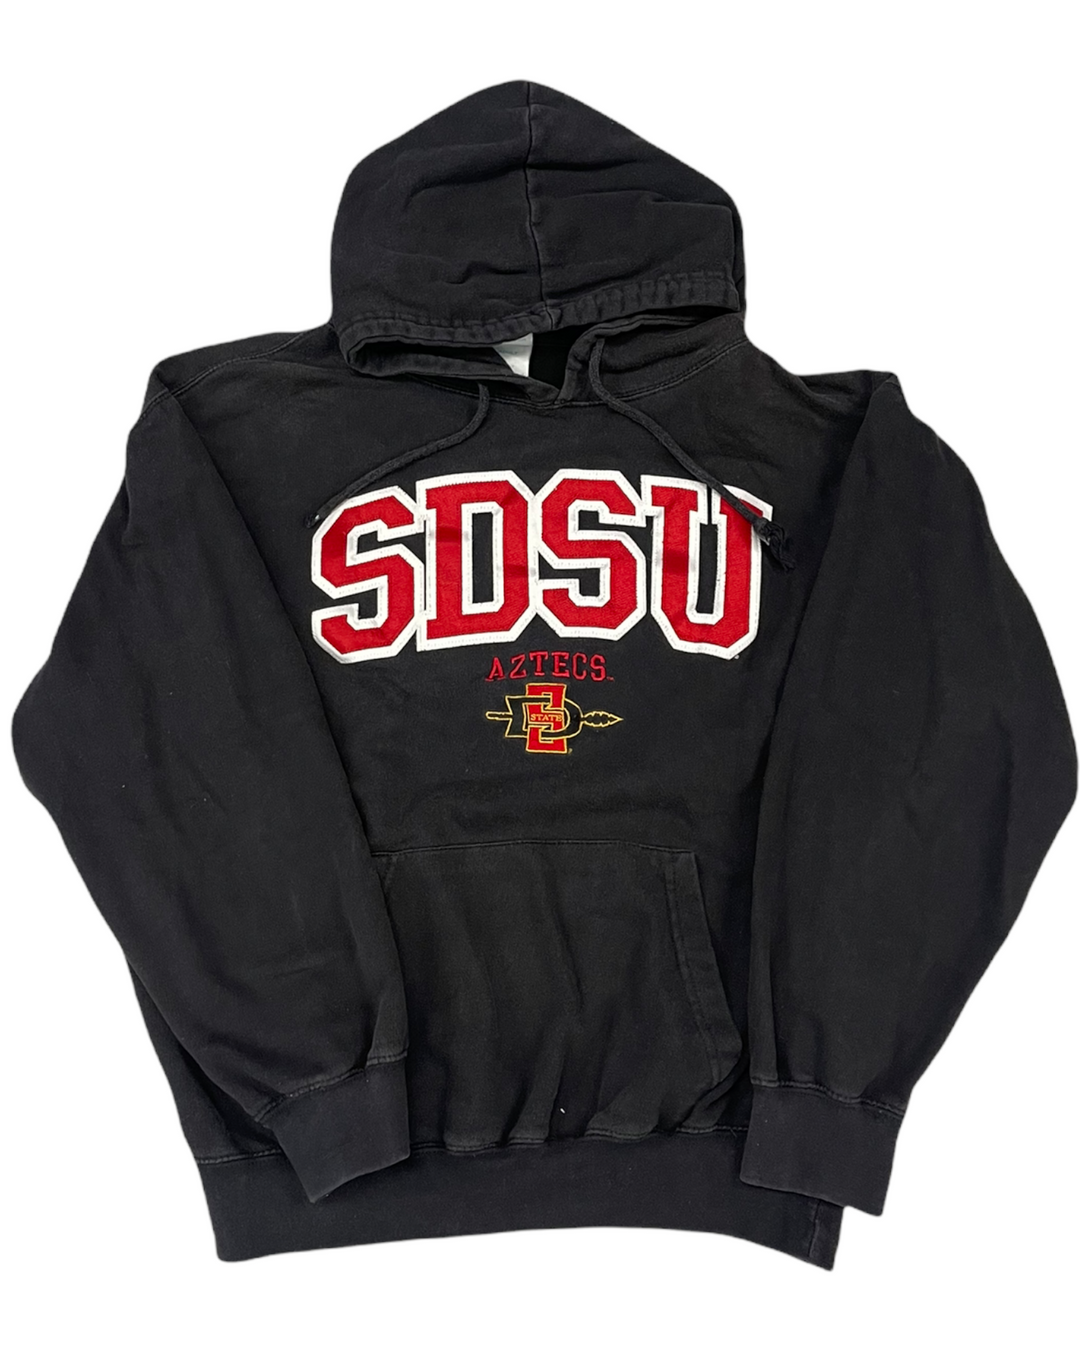 SDSU State Vintage Sweatshirt